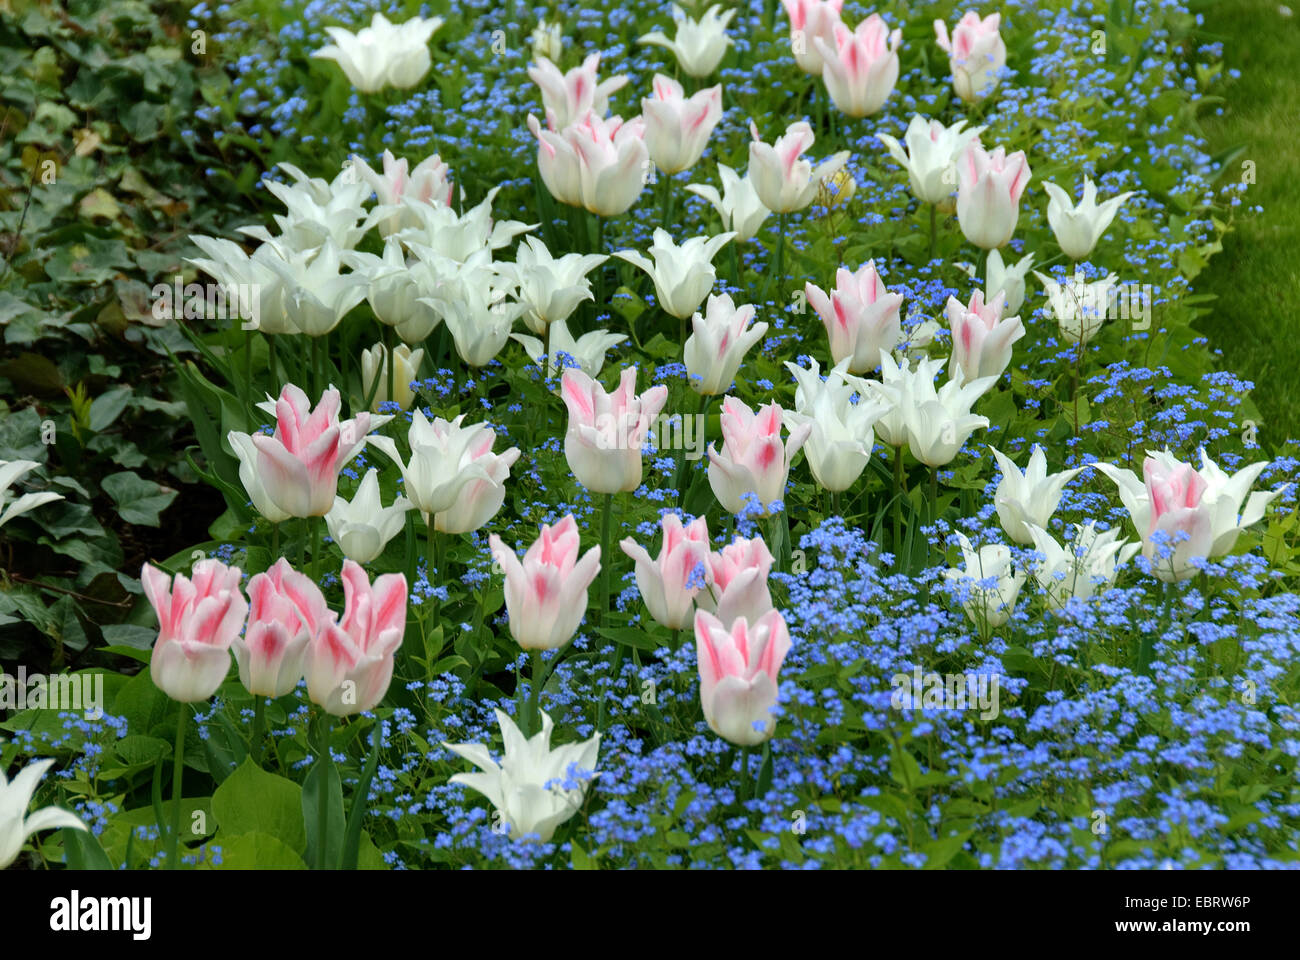 Jardin tulip (Tulipa 'Holland Chic', Tulipa Holland Chic), le cultivar sorte Holland et le cultivar blanc Chic Tulipa Trumphator Banque D'Images